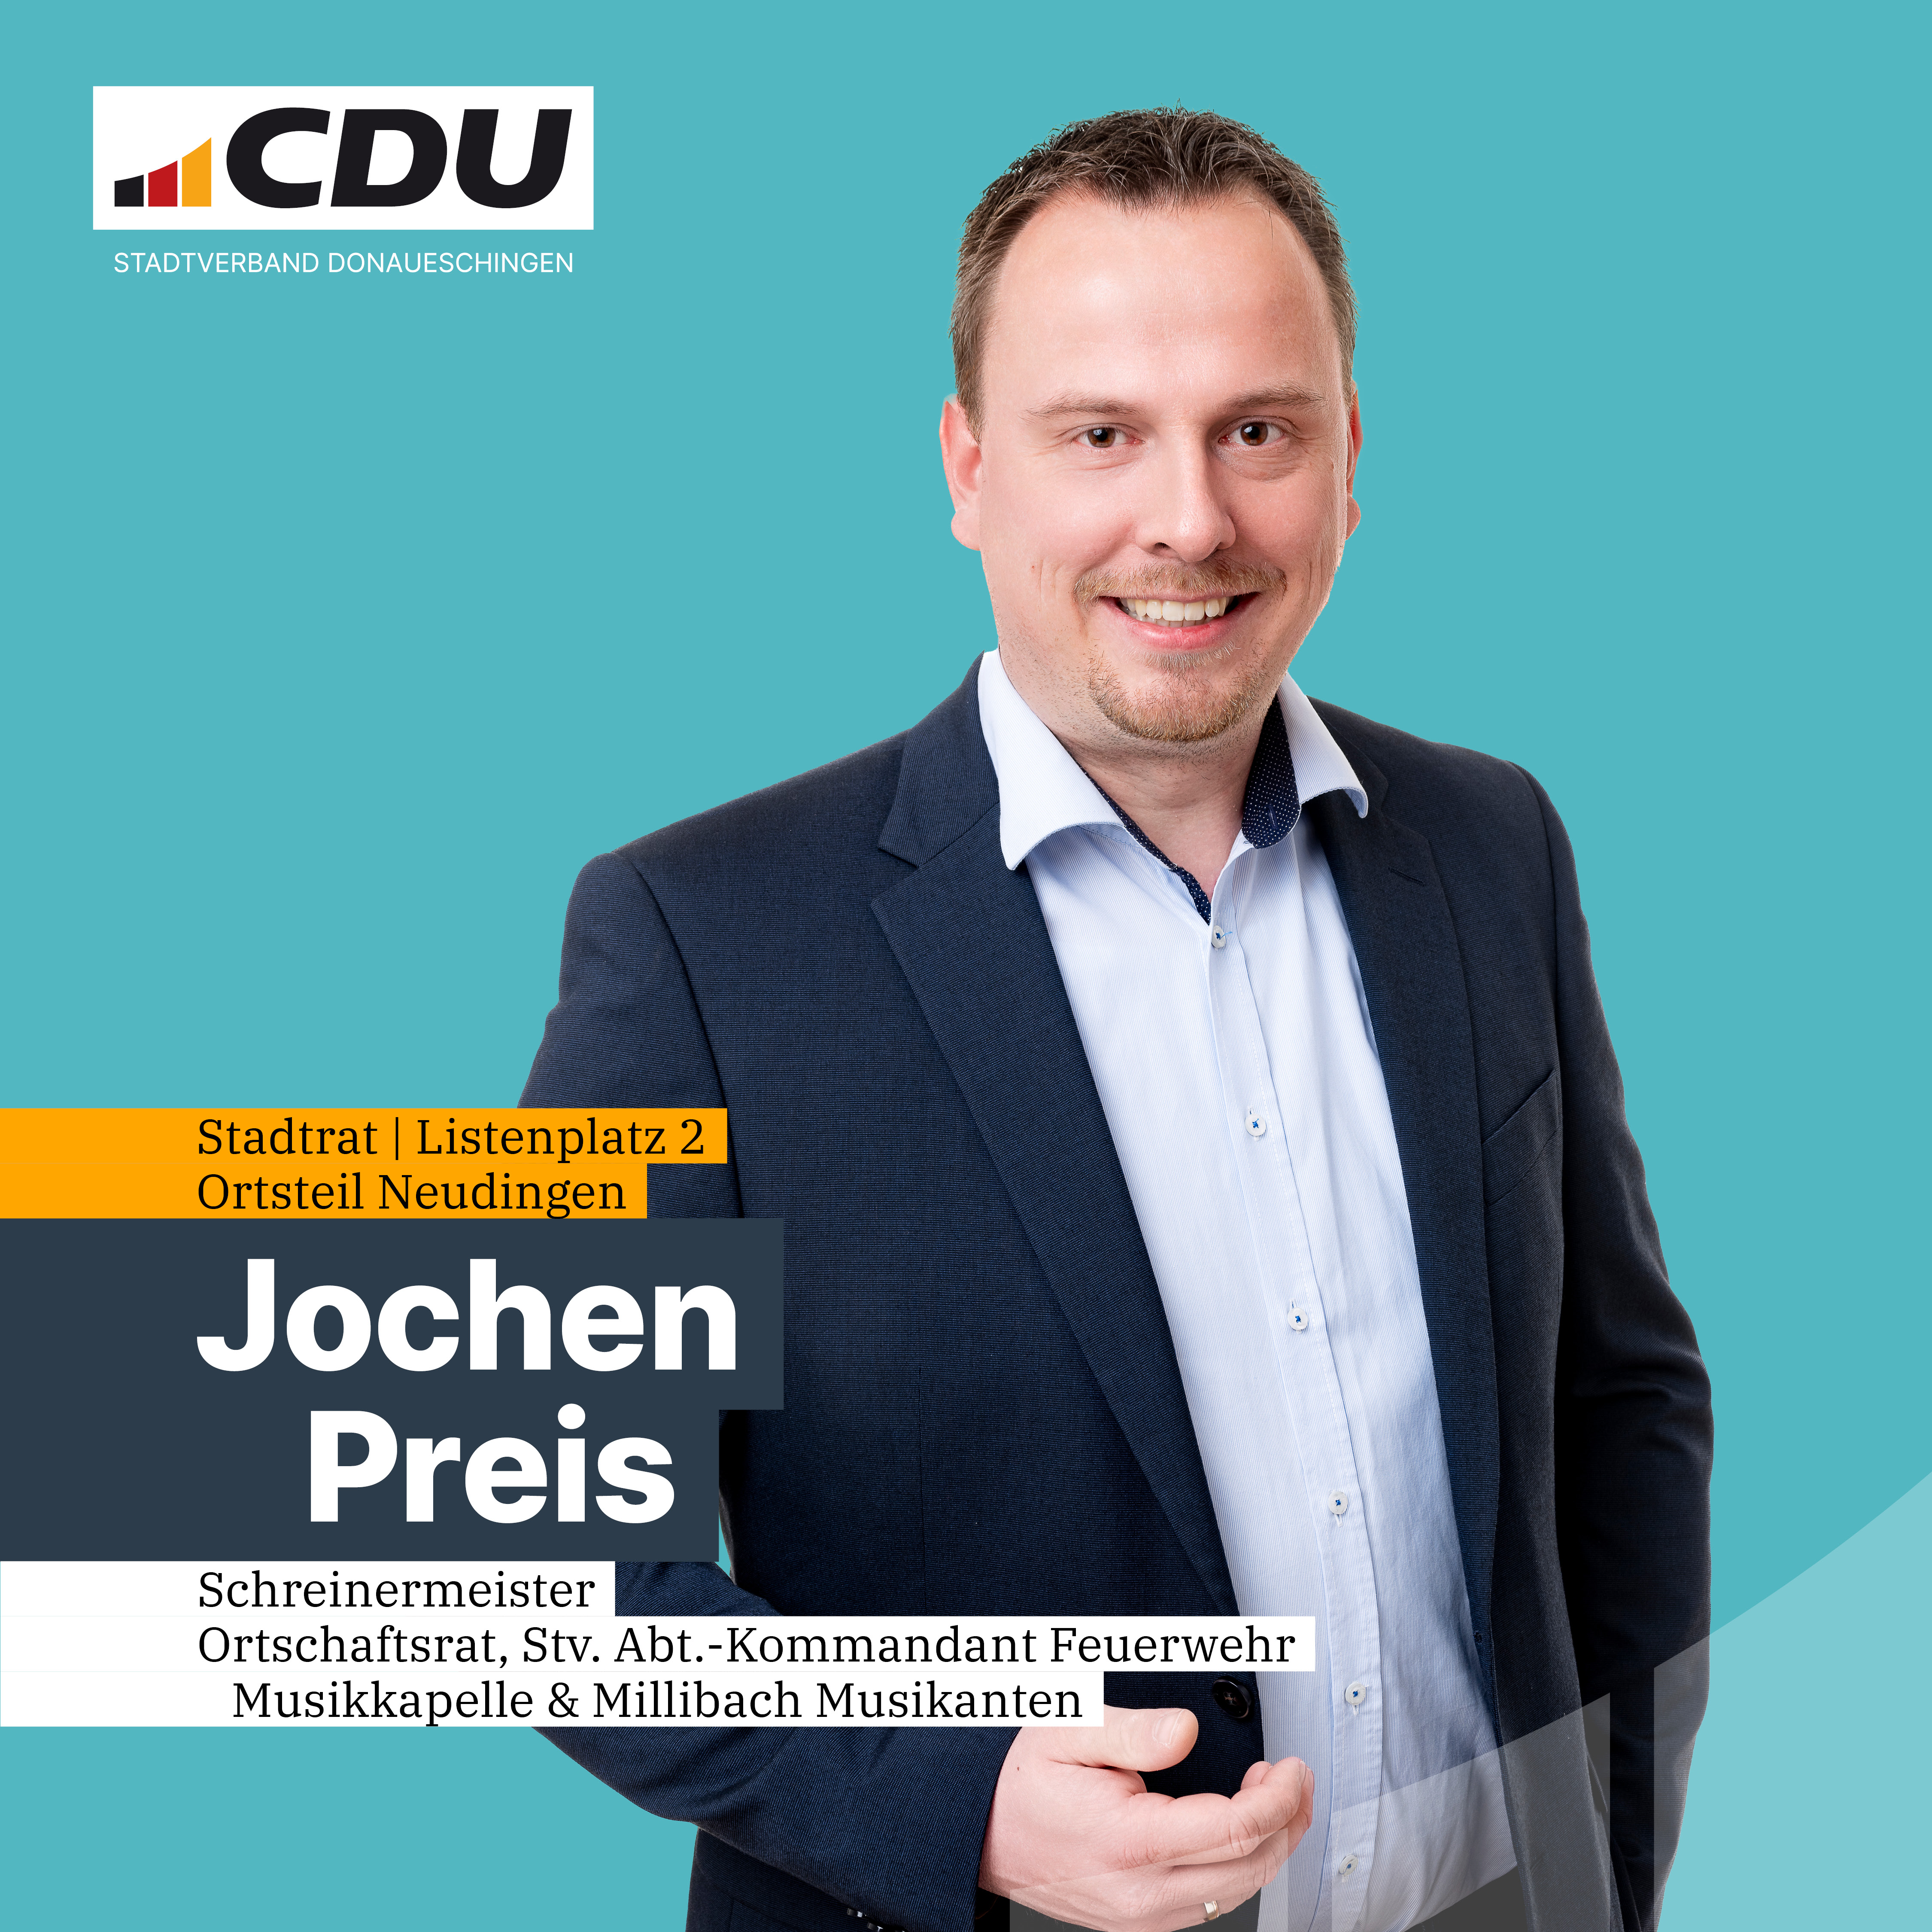  Jochen Preis